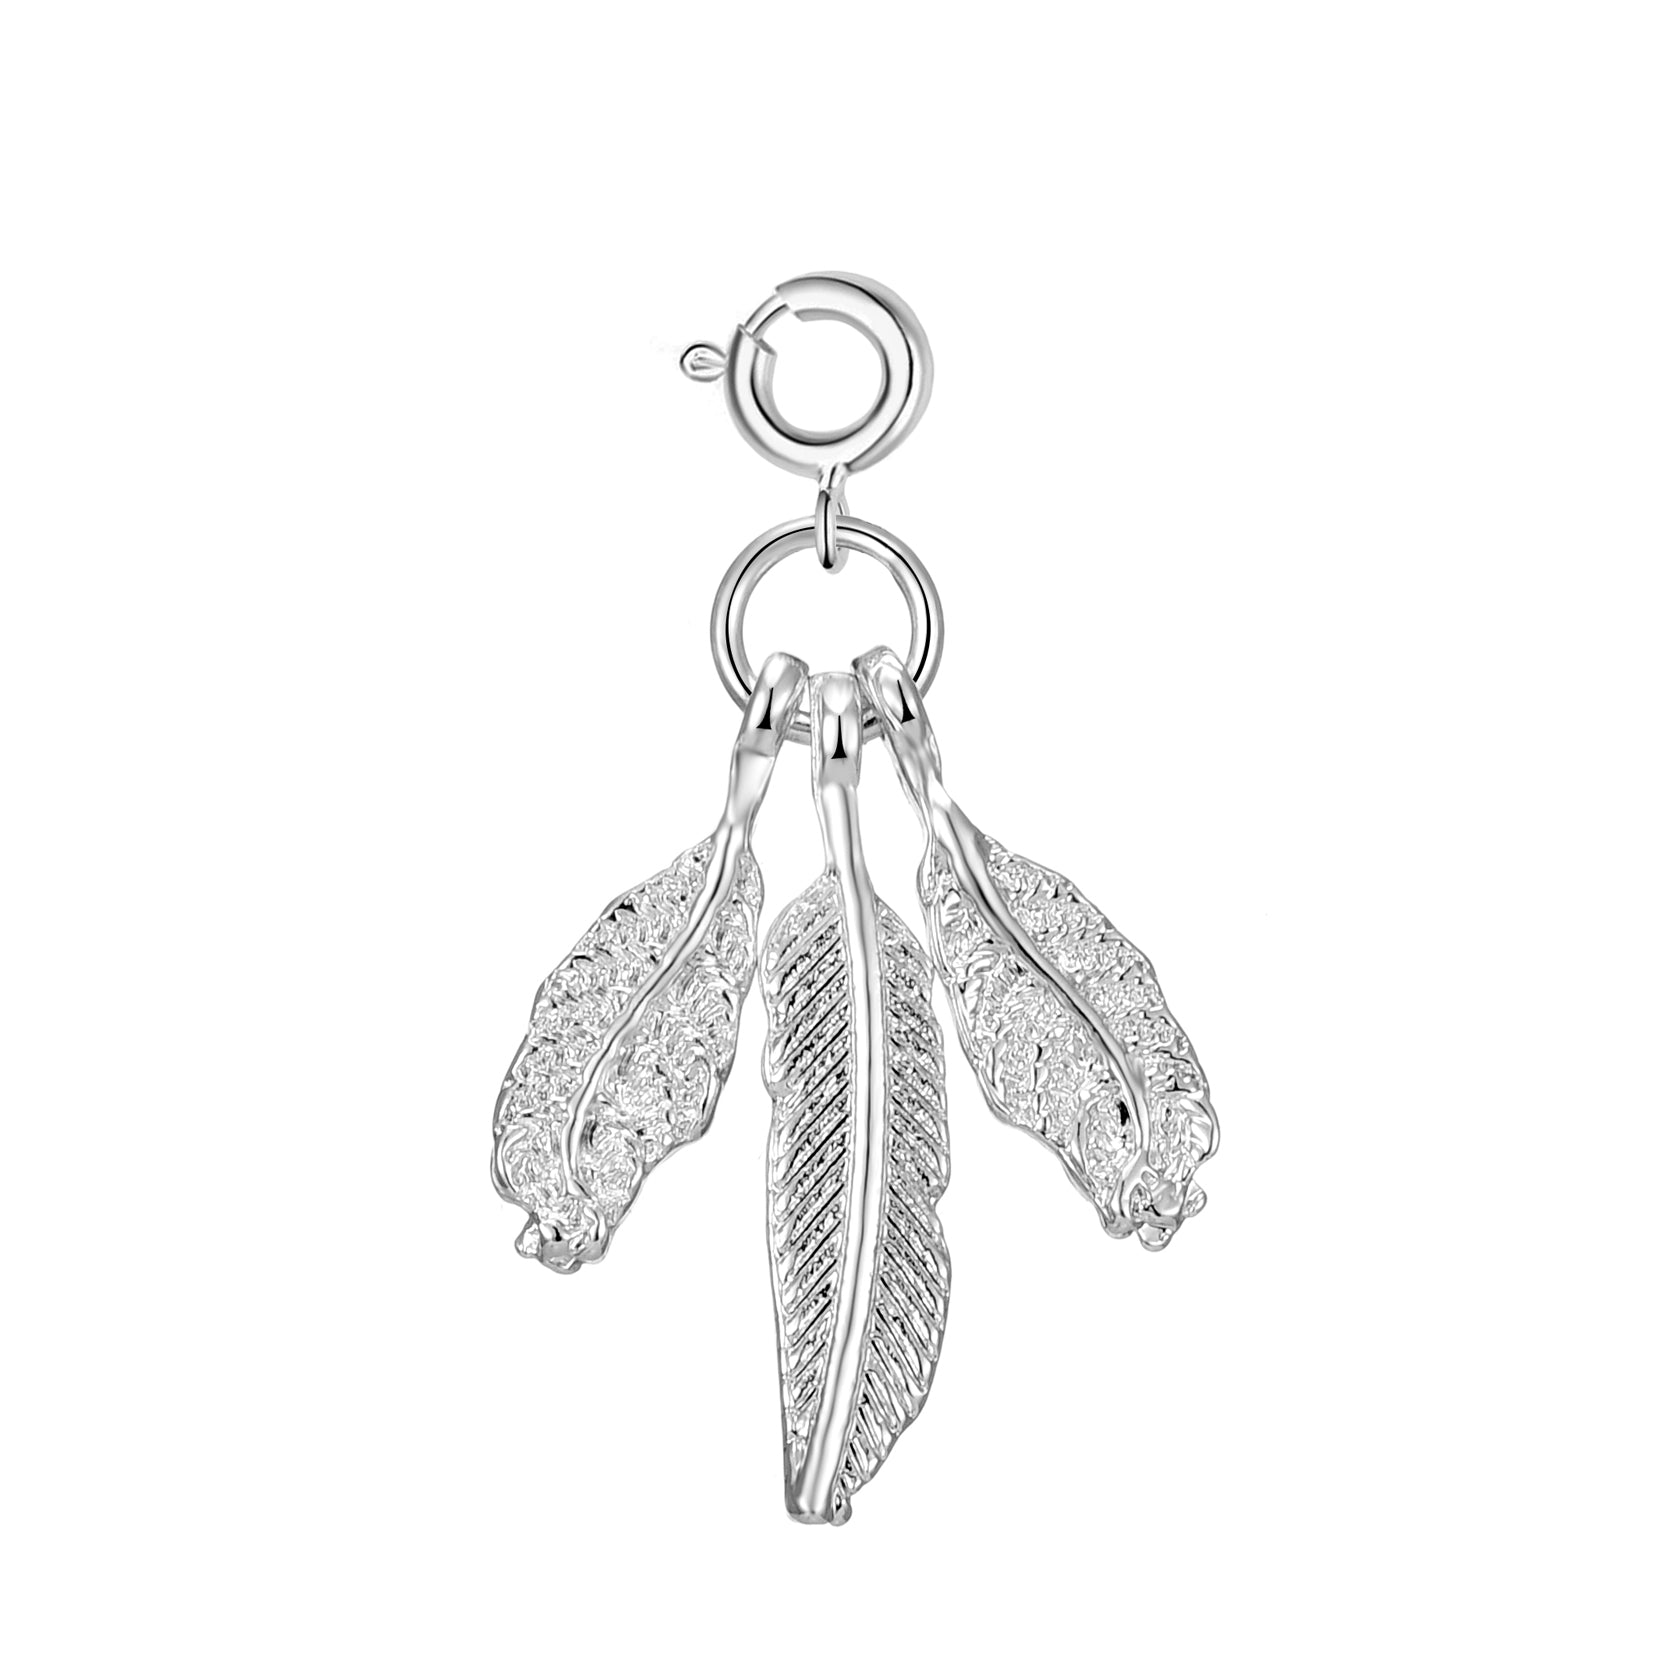 Feathers Charm by Philip Jones Jewellery